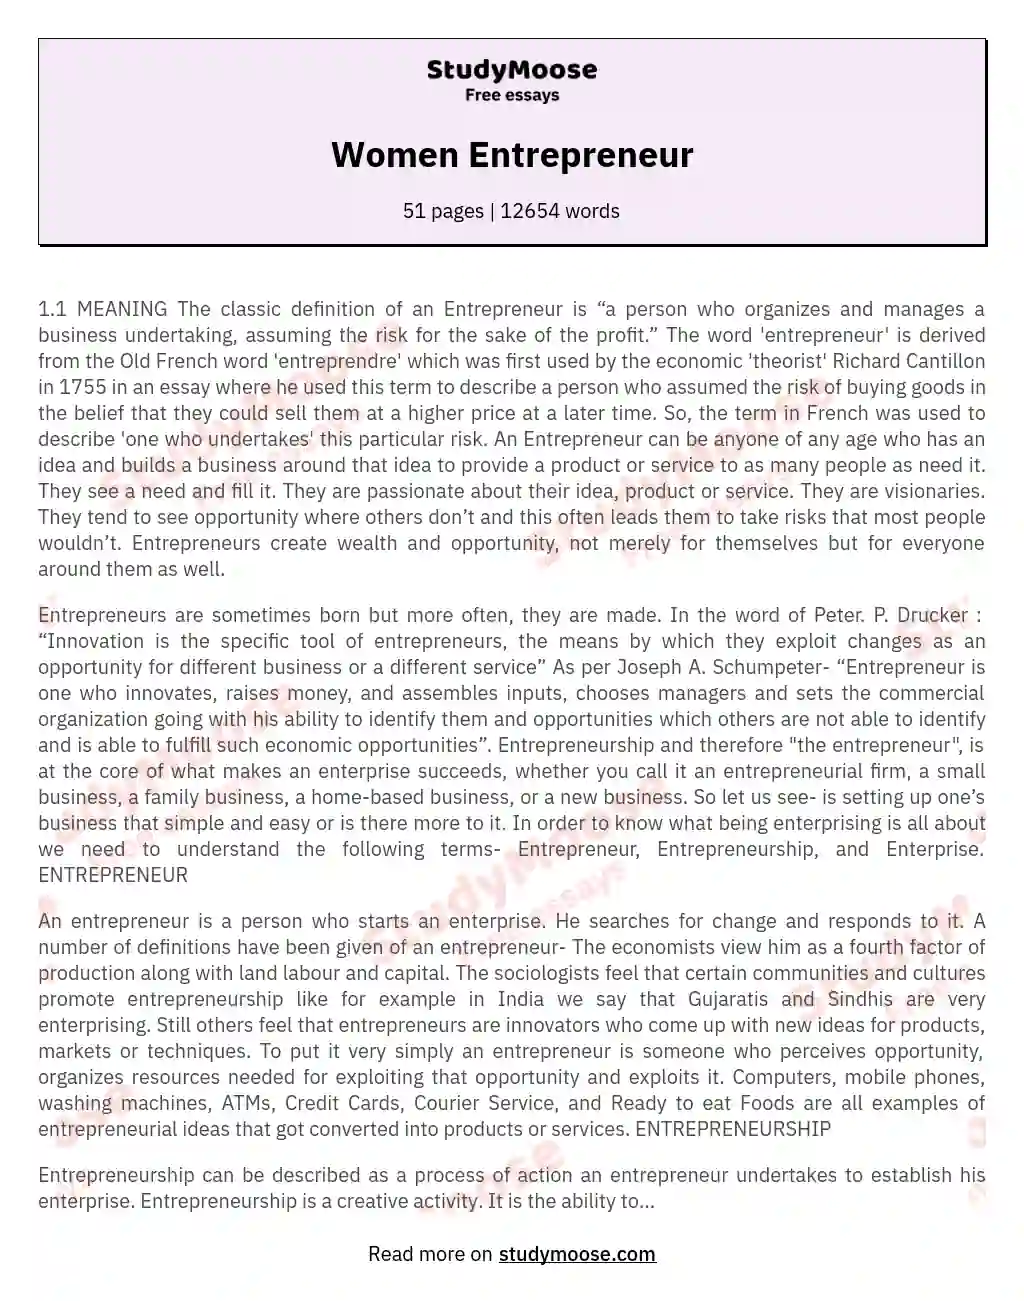 Women Entrepreneur essay